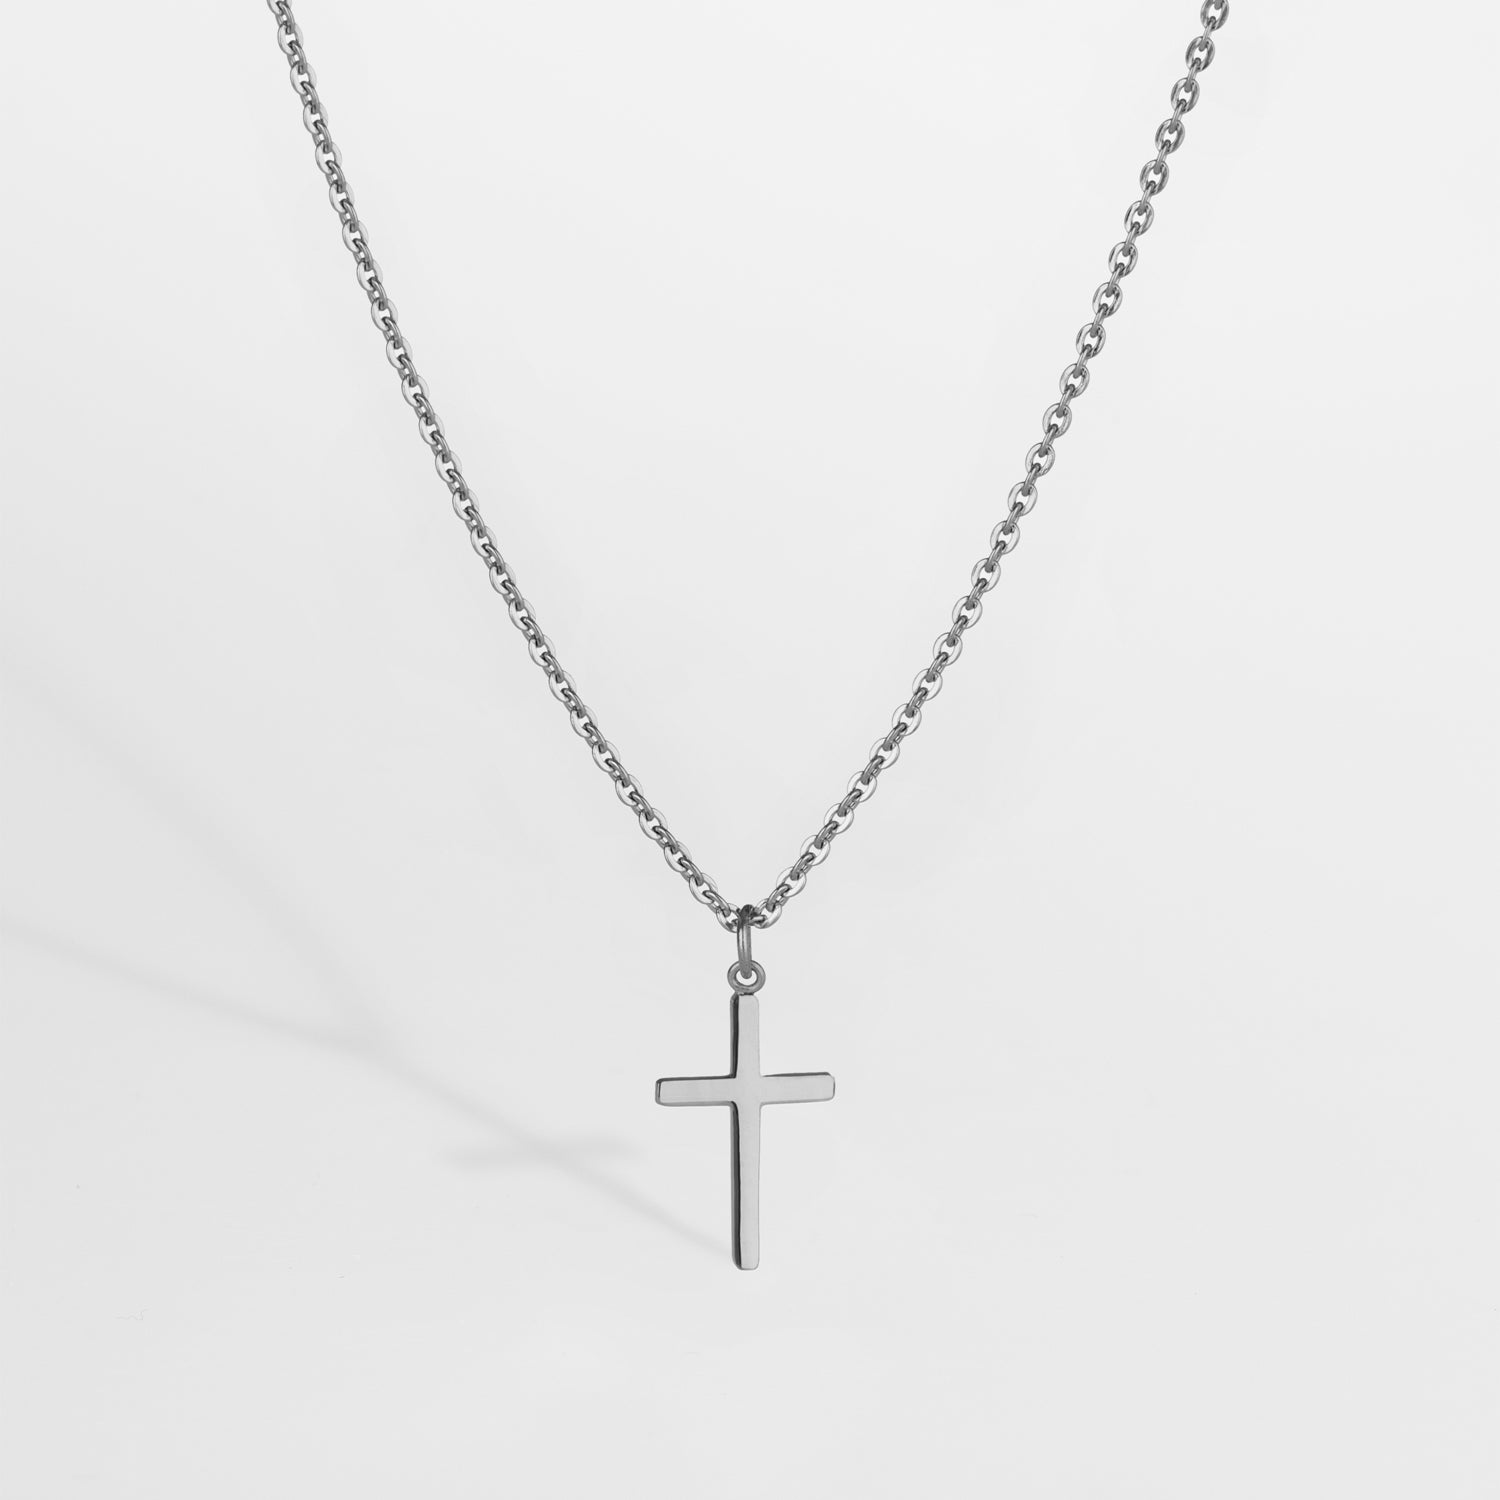 NL Cross chain - Silver-toned